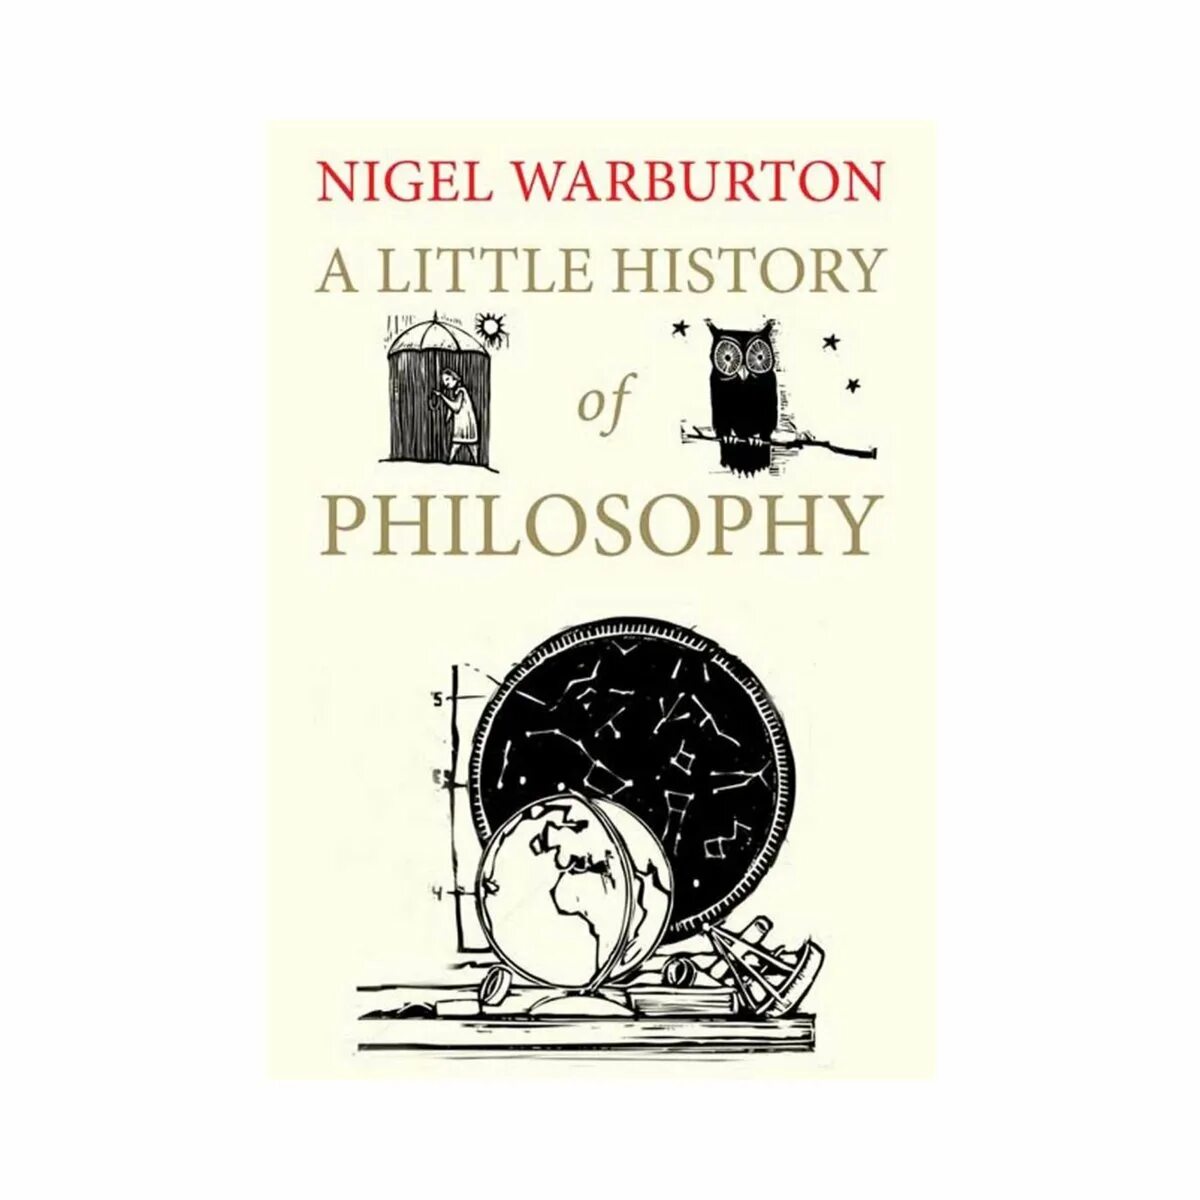 Nigel Warburton a little History of Philosophy. The Philosophy book. Little History of Philosophy. Философия чтения книг.